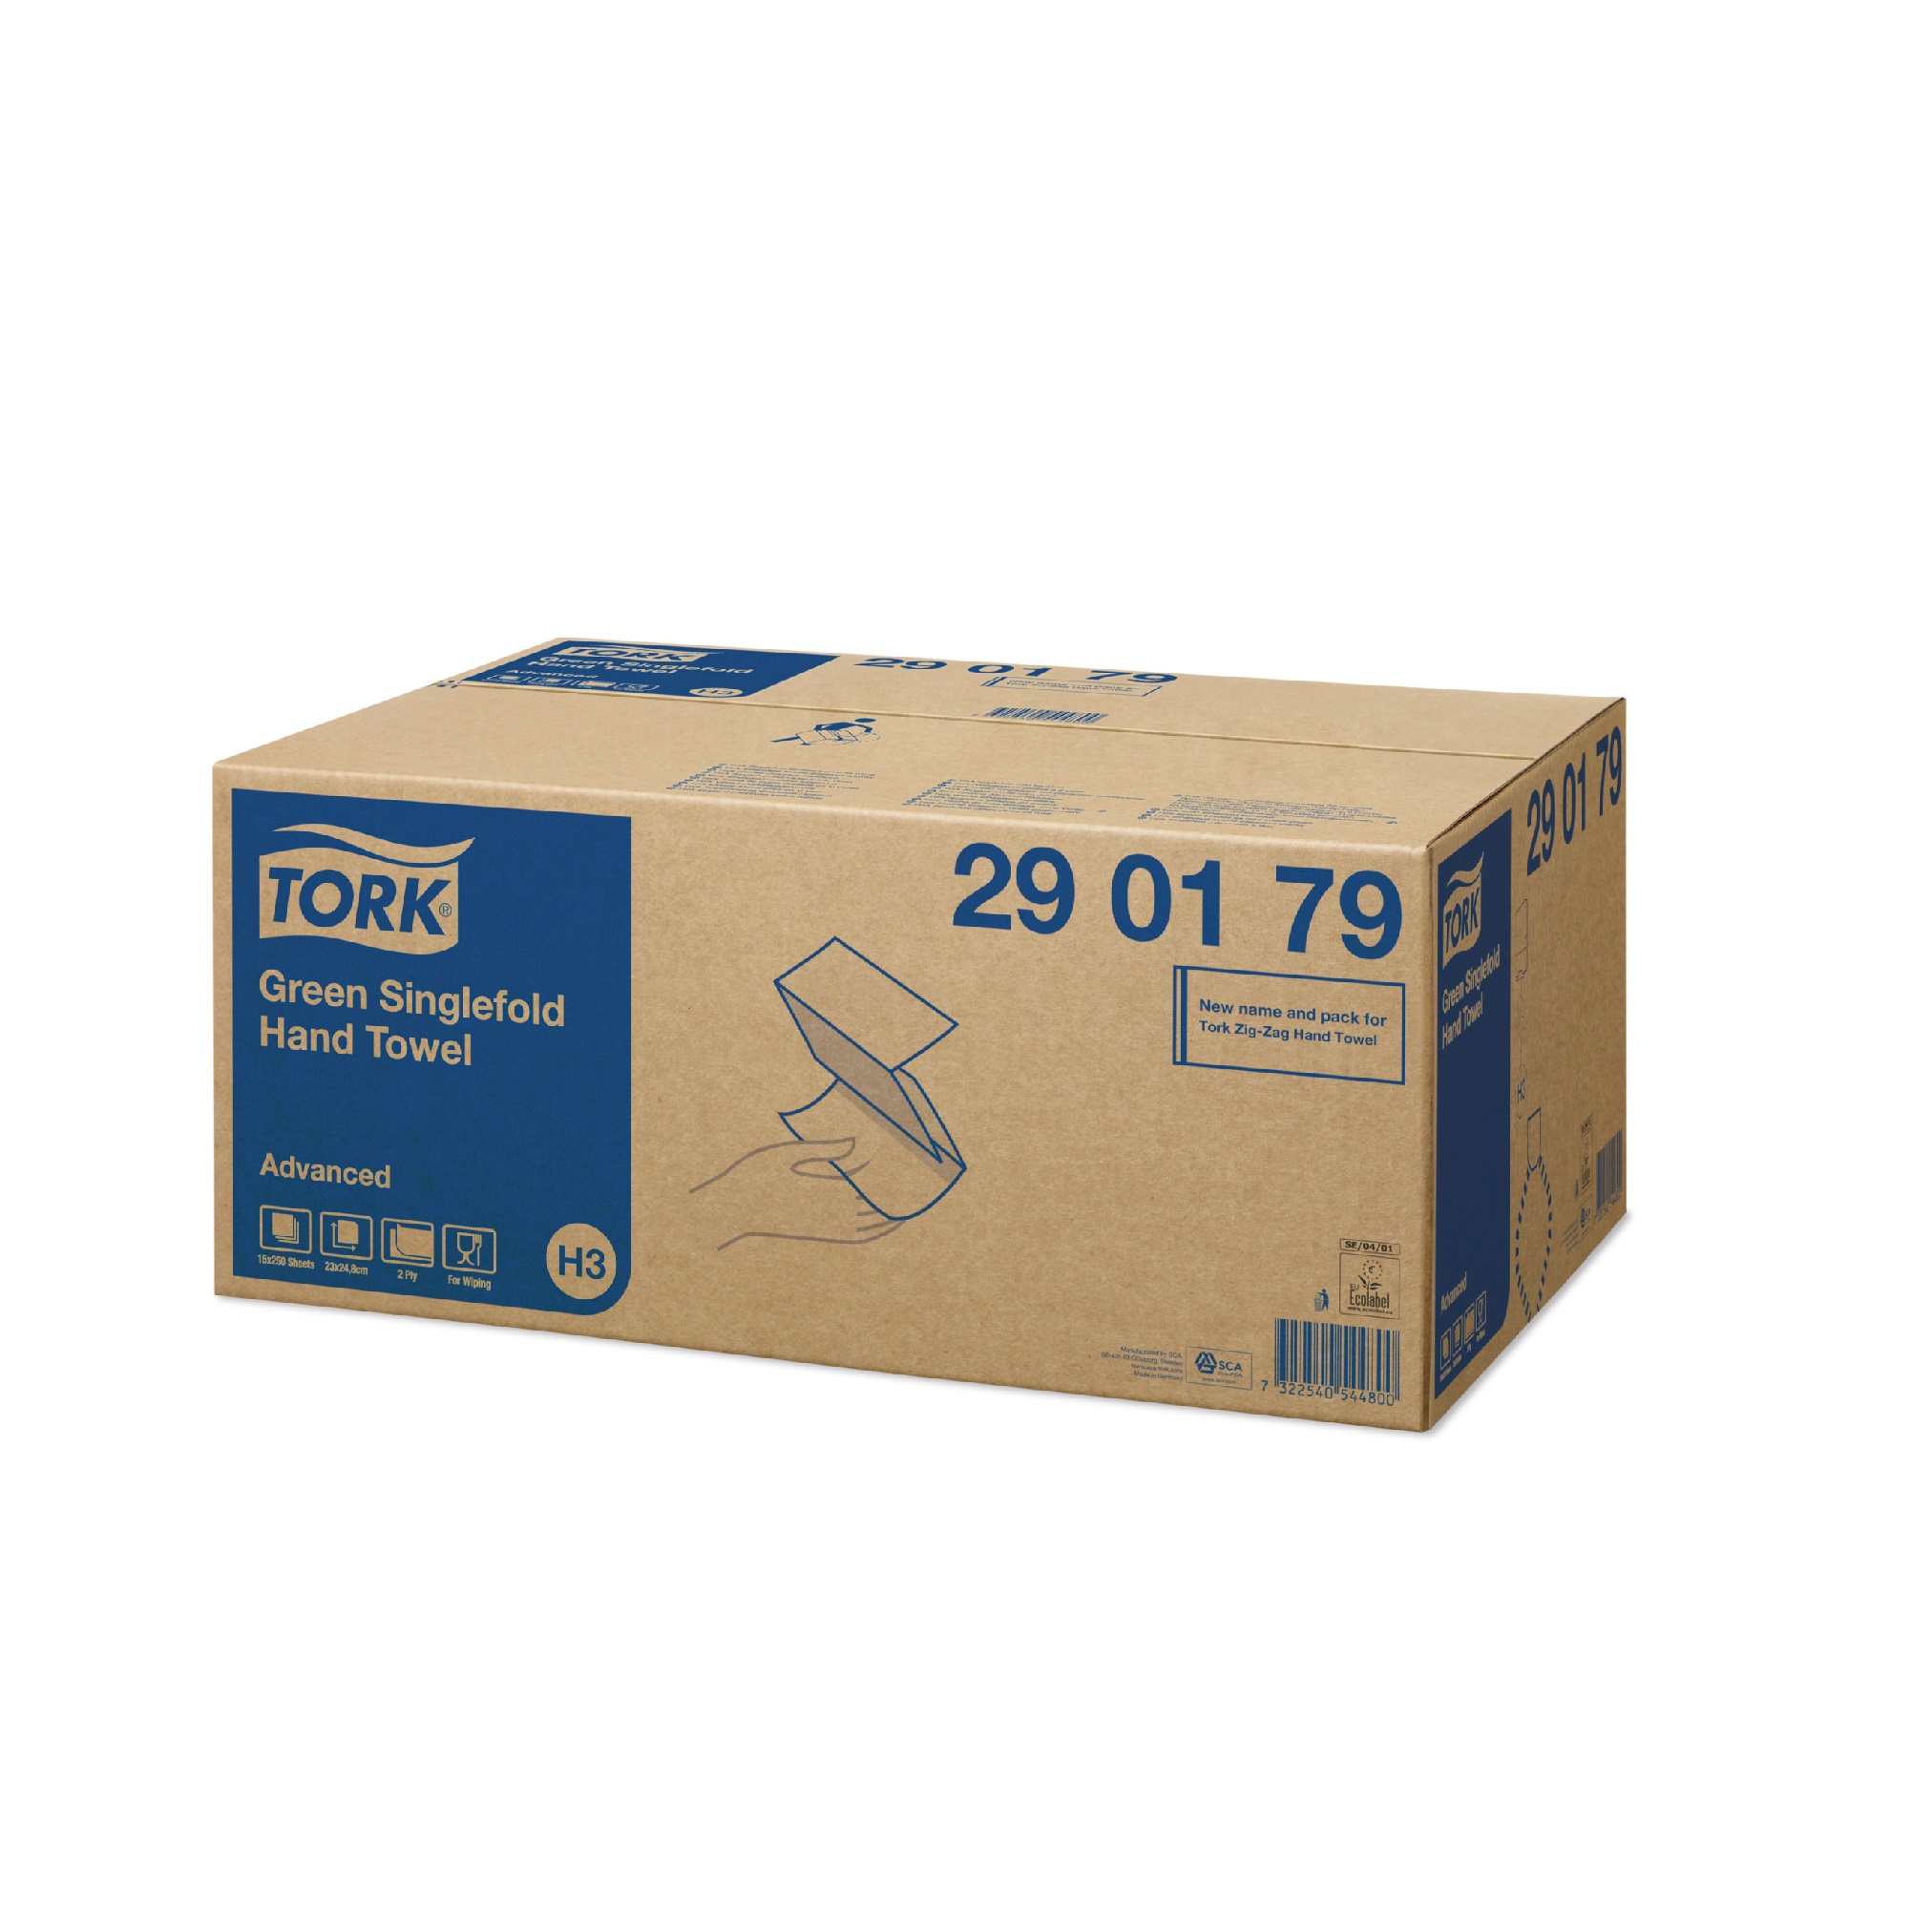 Полотенца системы h3. Tork 120067. Tork h1 120067. 120067 Tork matic полотенца в рулонах. Tork Advanced 290184.